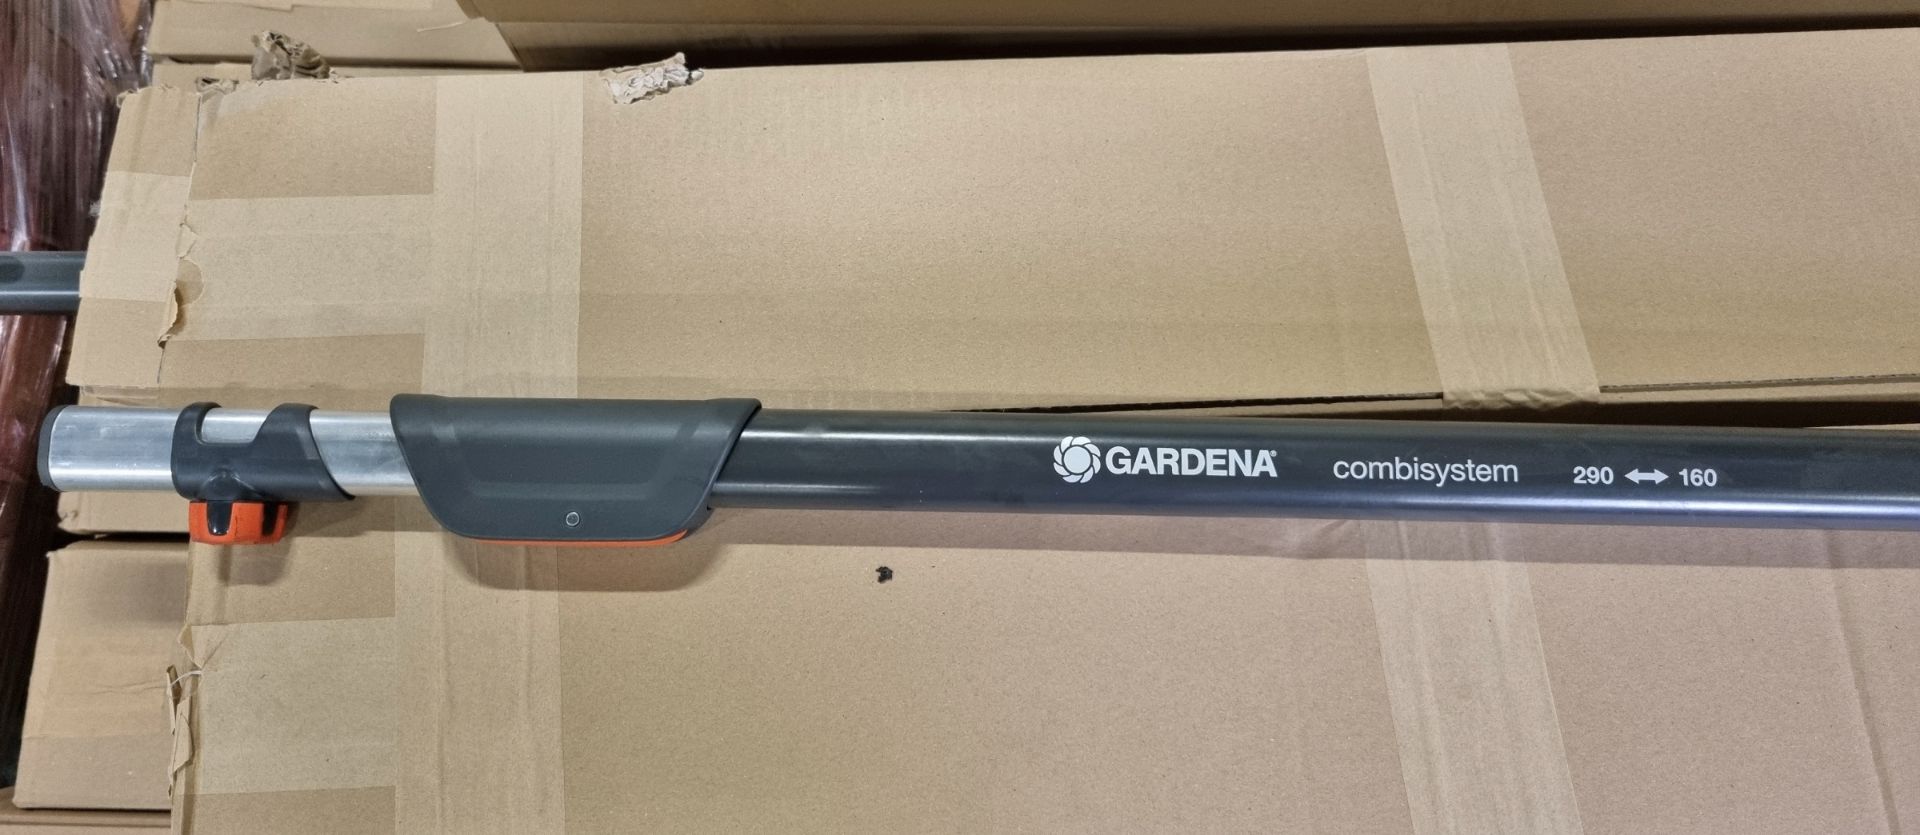 40x Gardena combisystem 210 - 390cm telescopic handles, 72x Gardena combisystem 160 - 290cm handles - Image 3 of 6